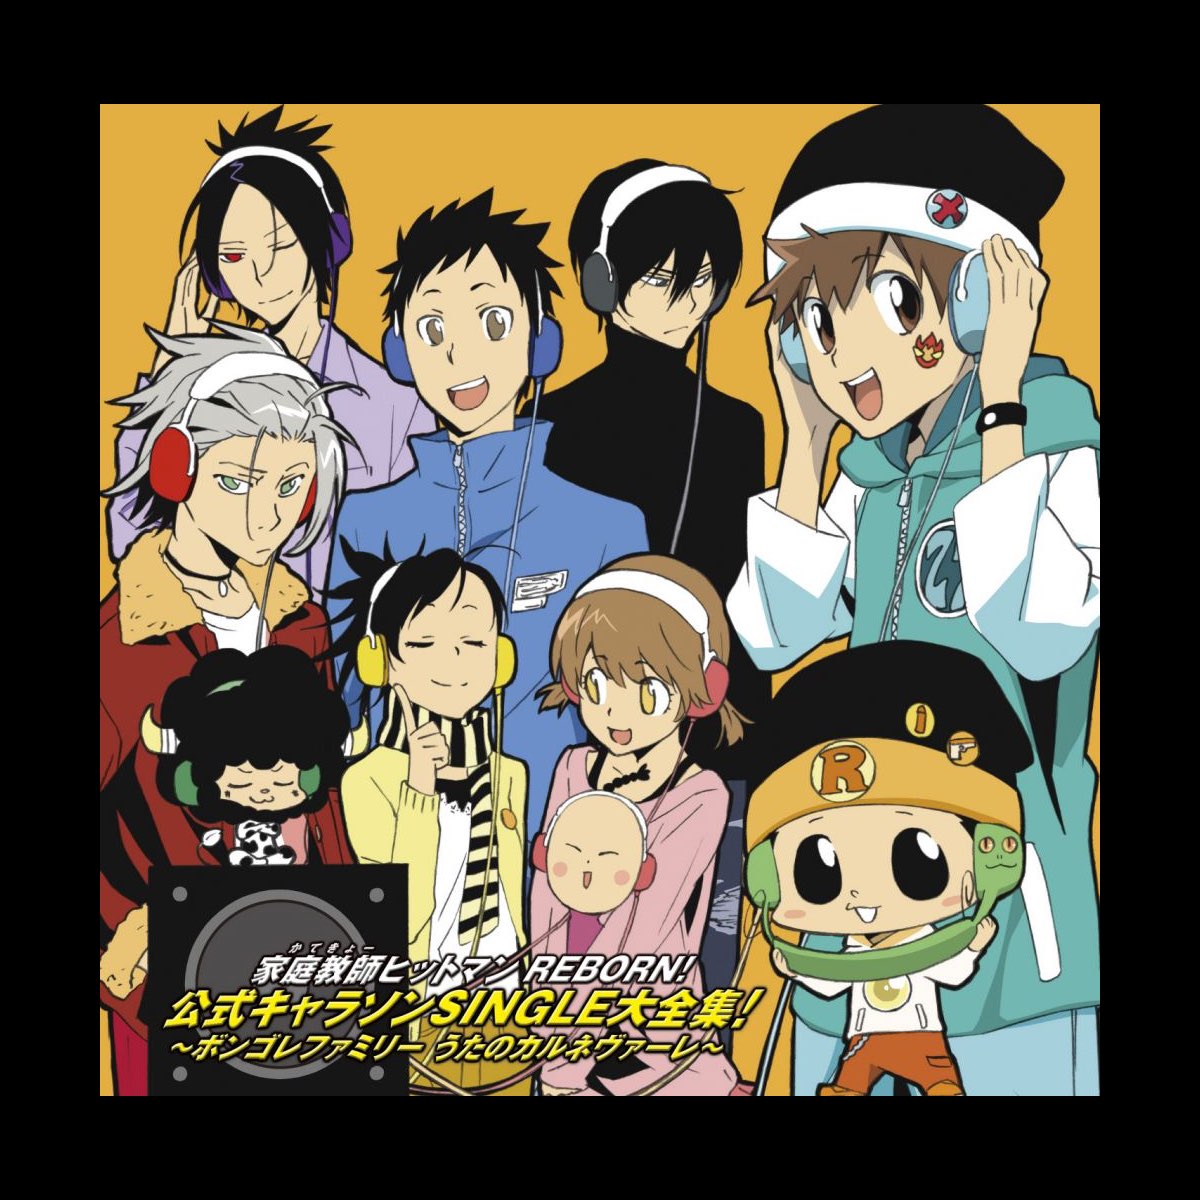 Katekyo Hitman Reborn! Character Song Single Complete Works III[CD